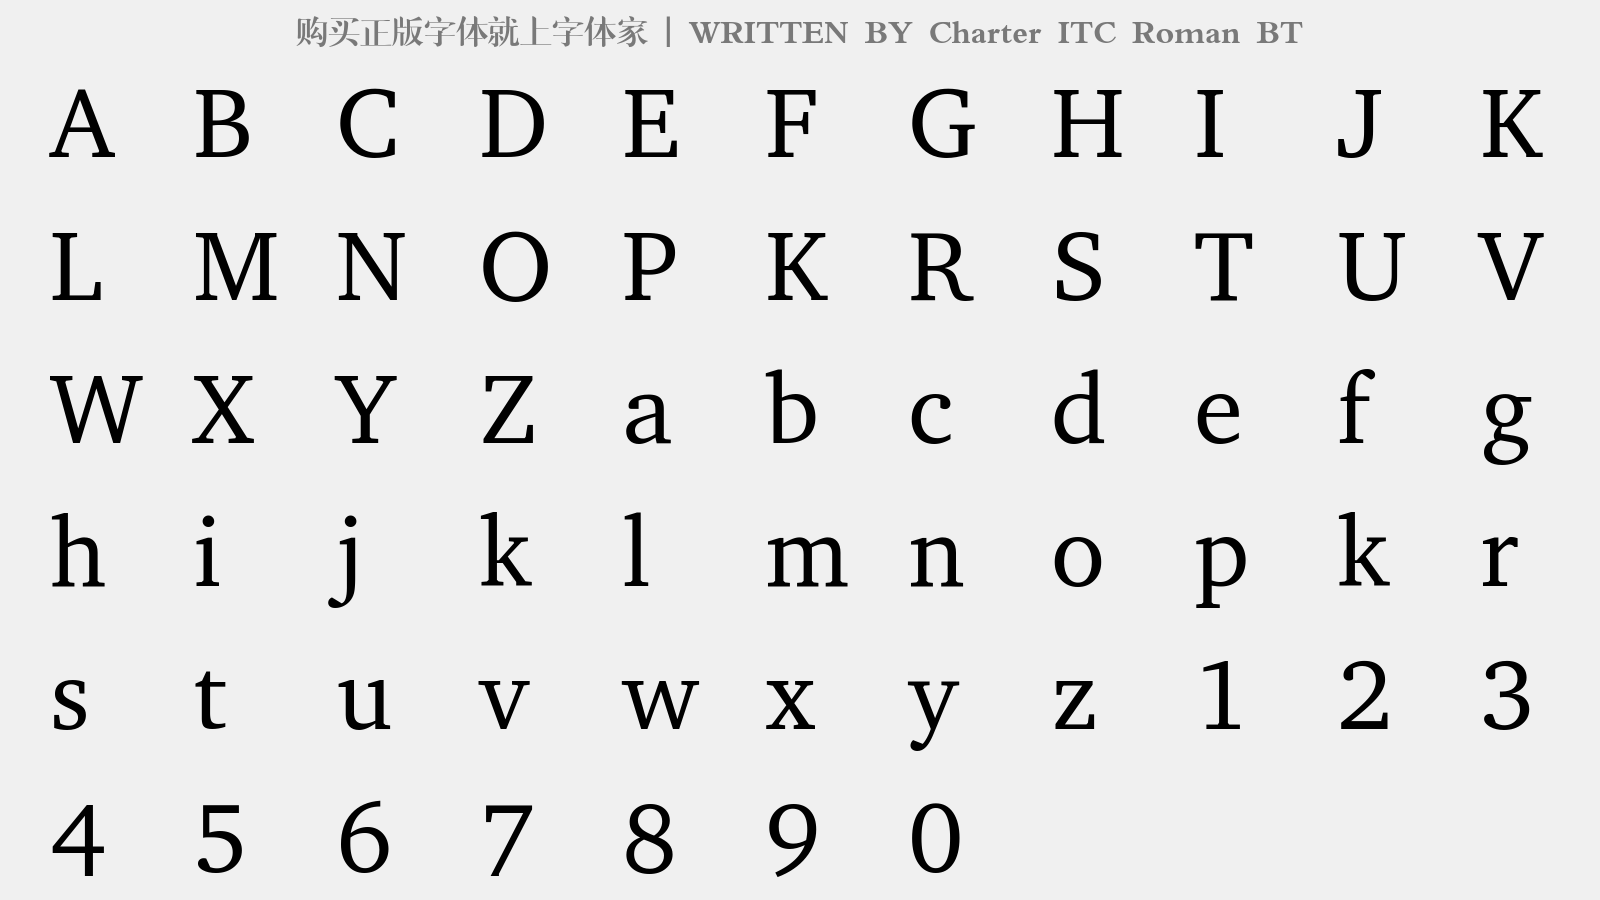 Charter ITC Roman BT - 大写字母/小写字母/数字